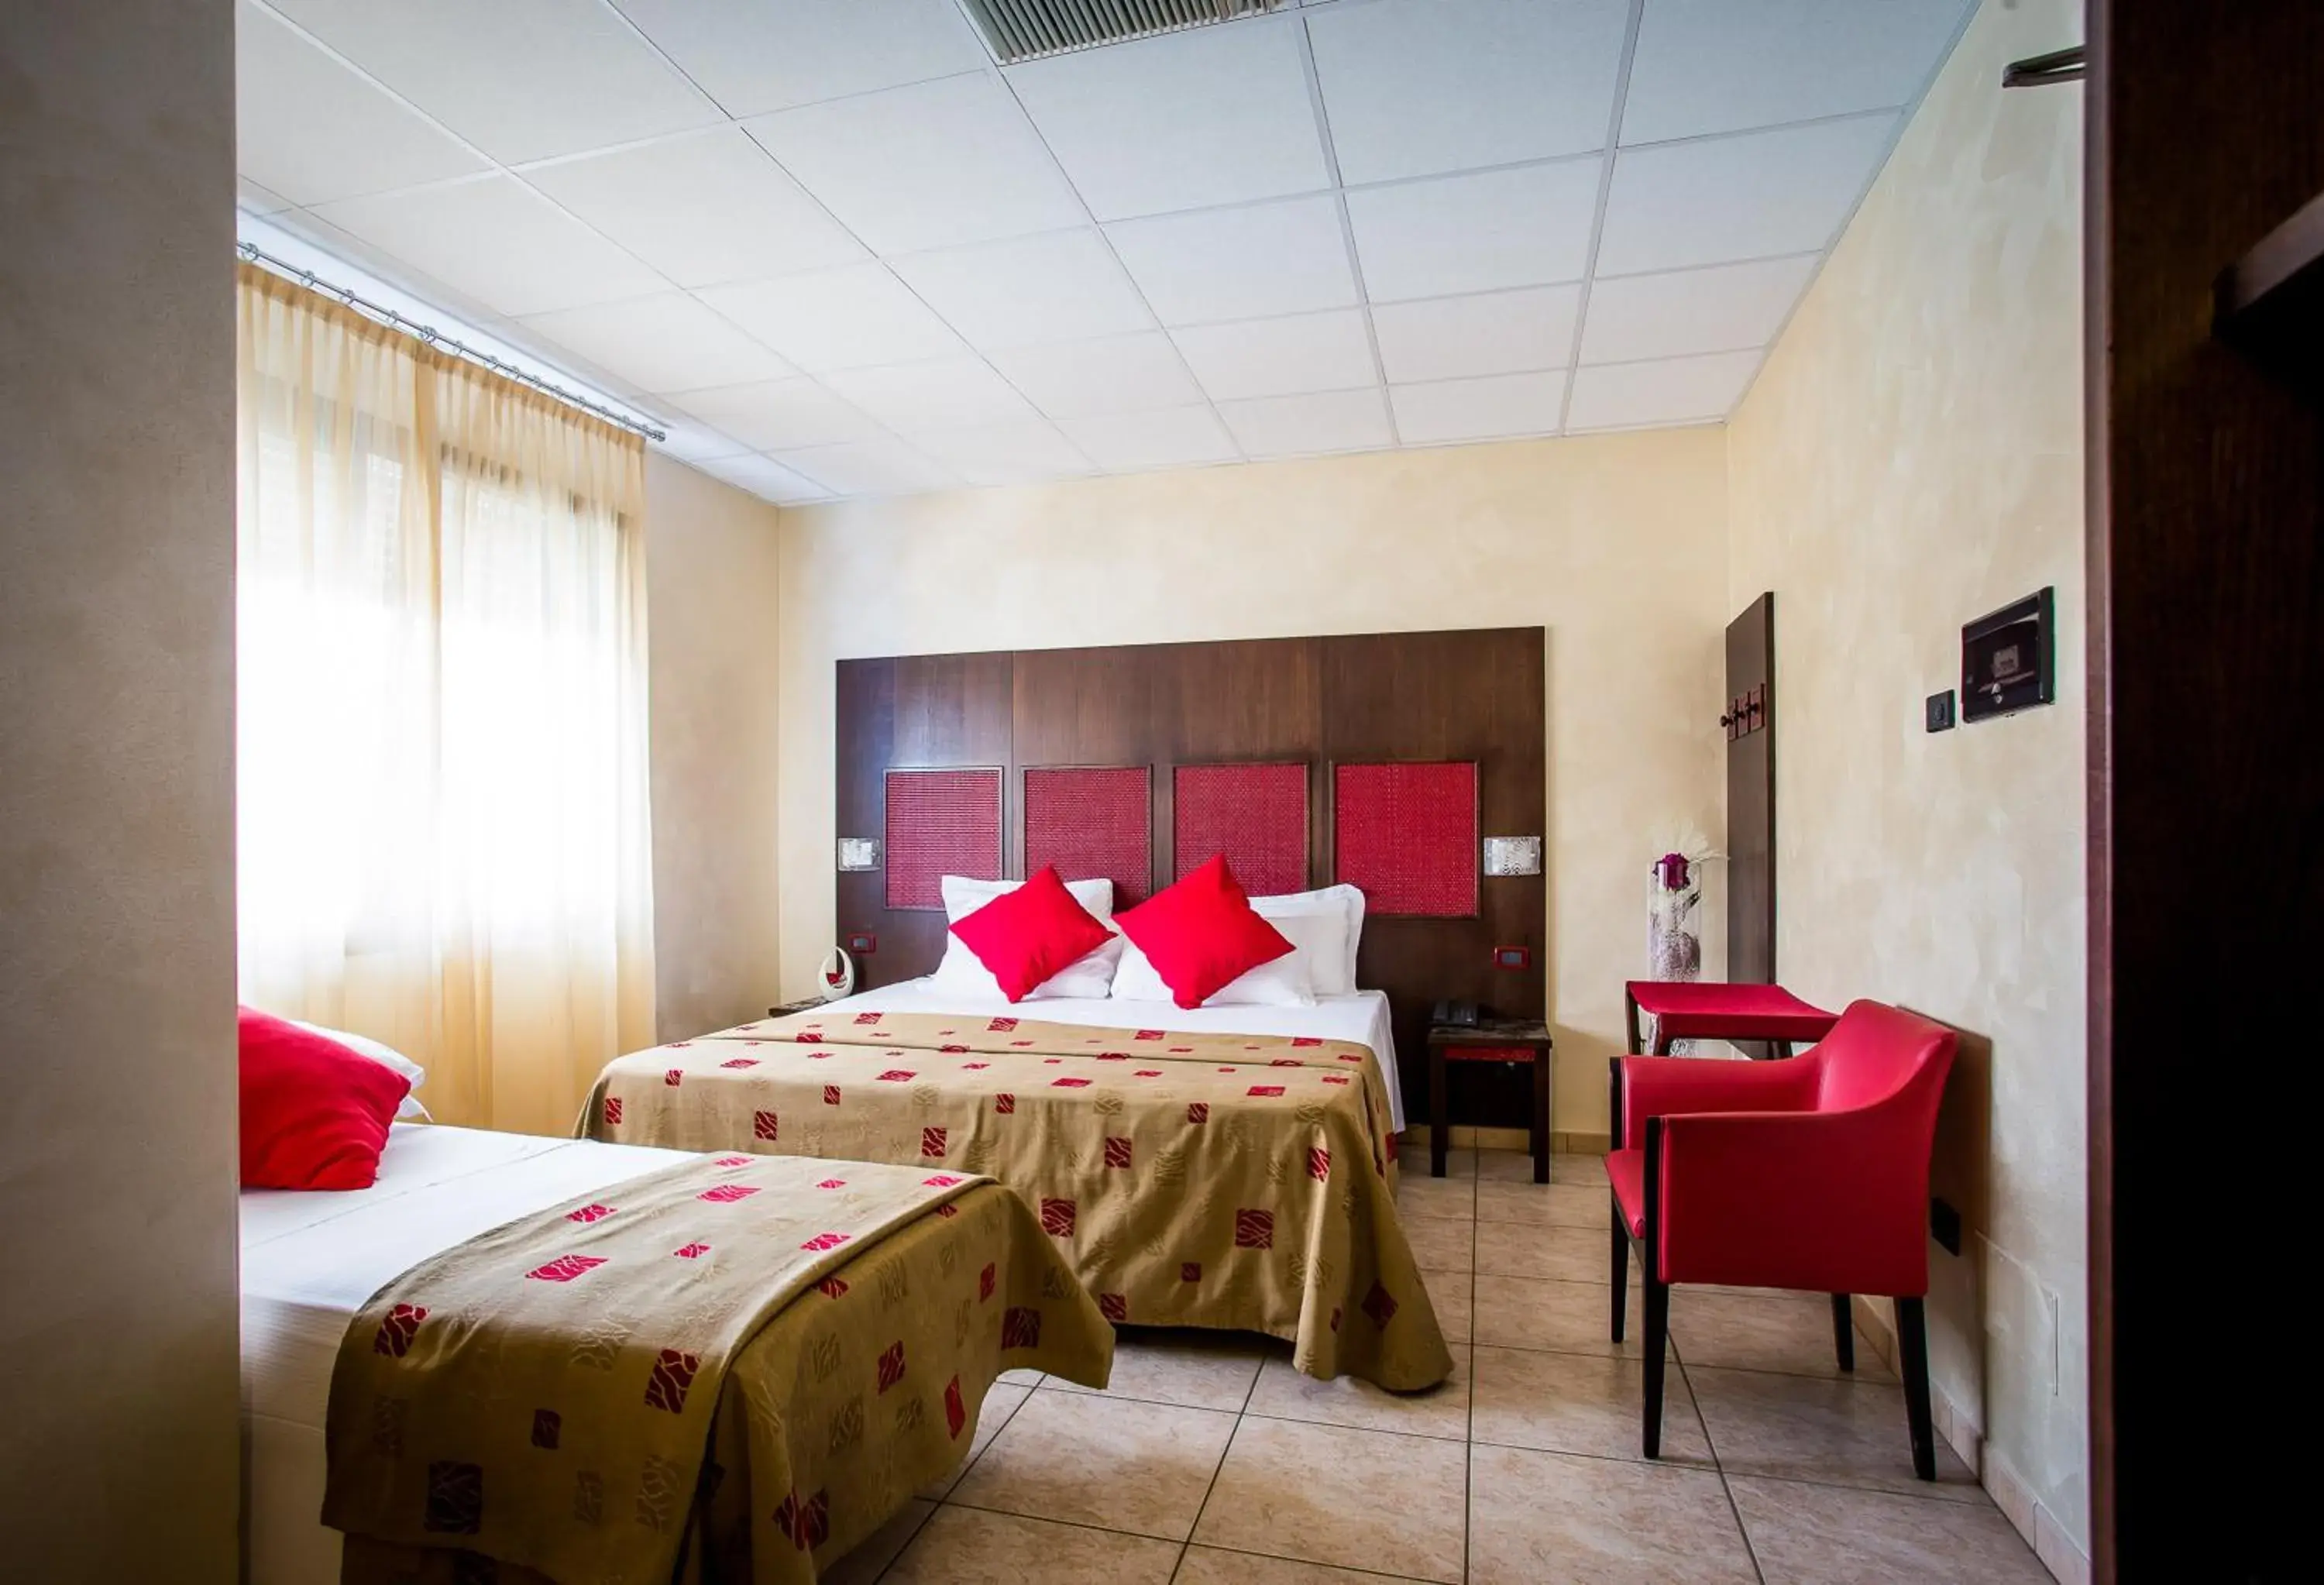 Bed, Room Photo in Piccolo Hotel Nogara